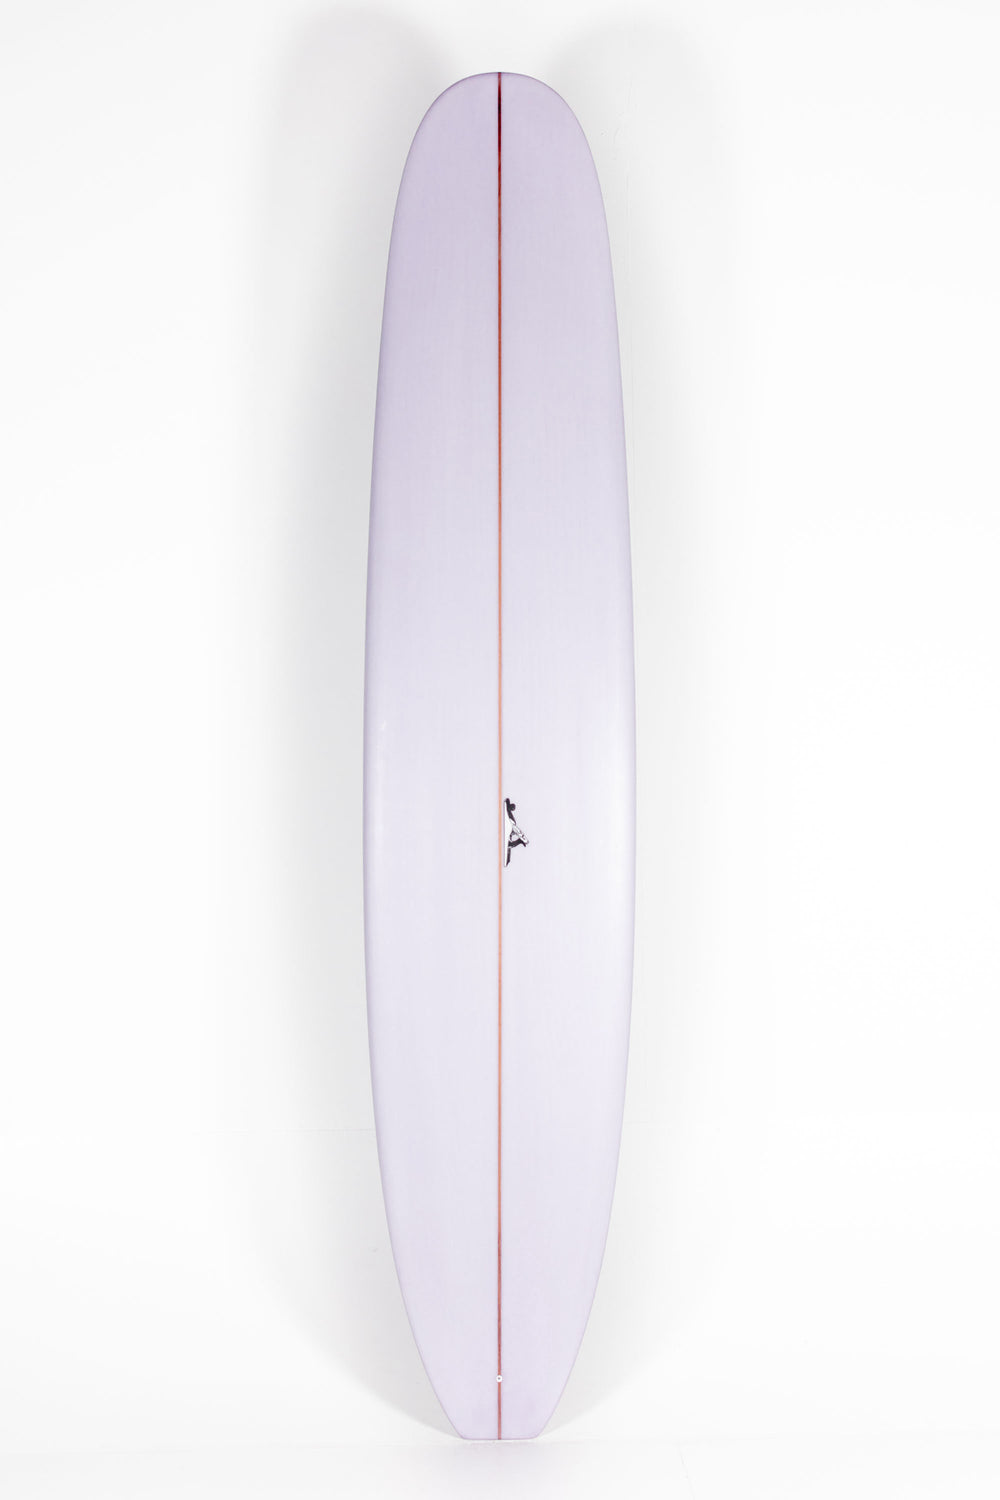 Pukas Surf Shop - Thomas Surfboards - KEEPER - 9'5